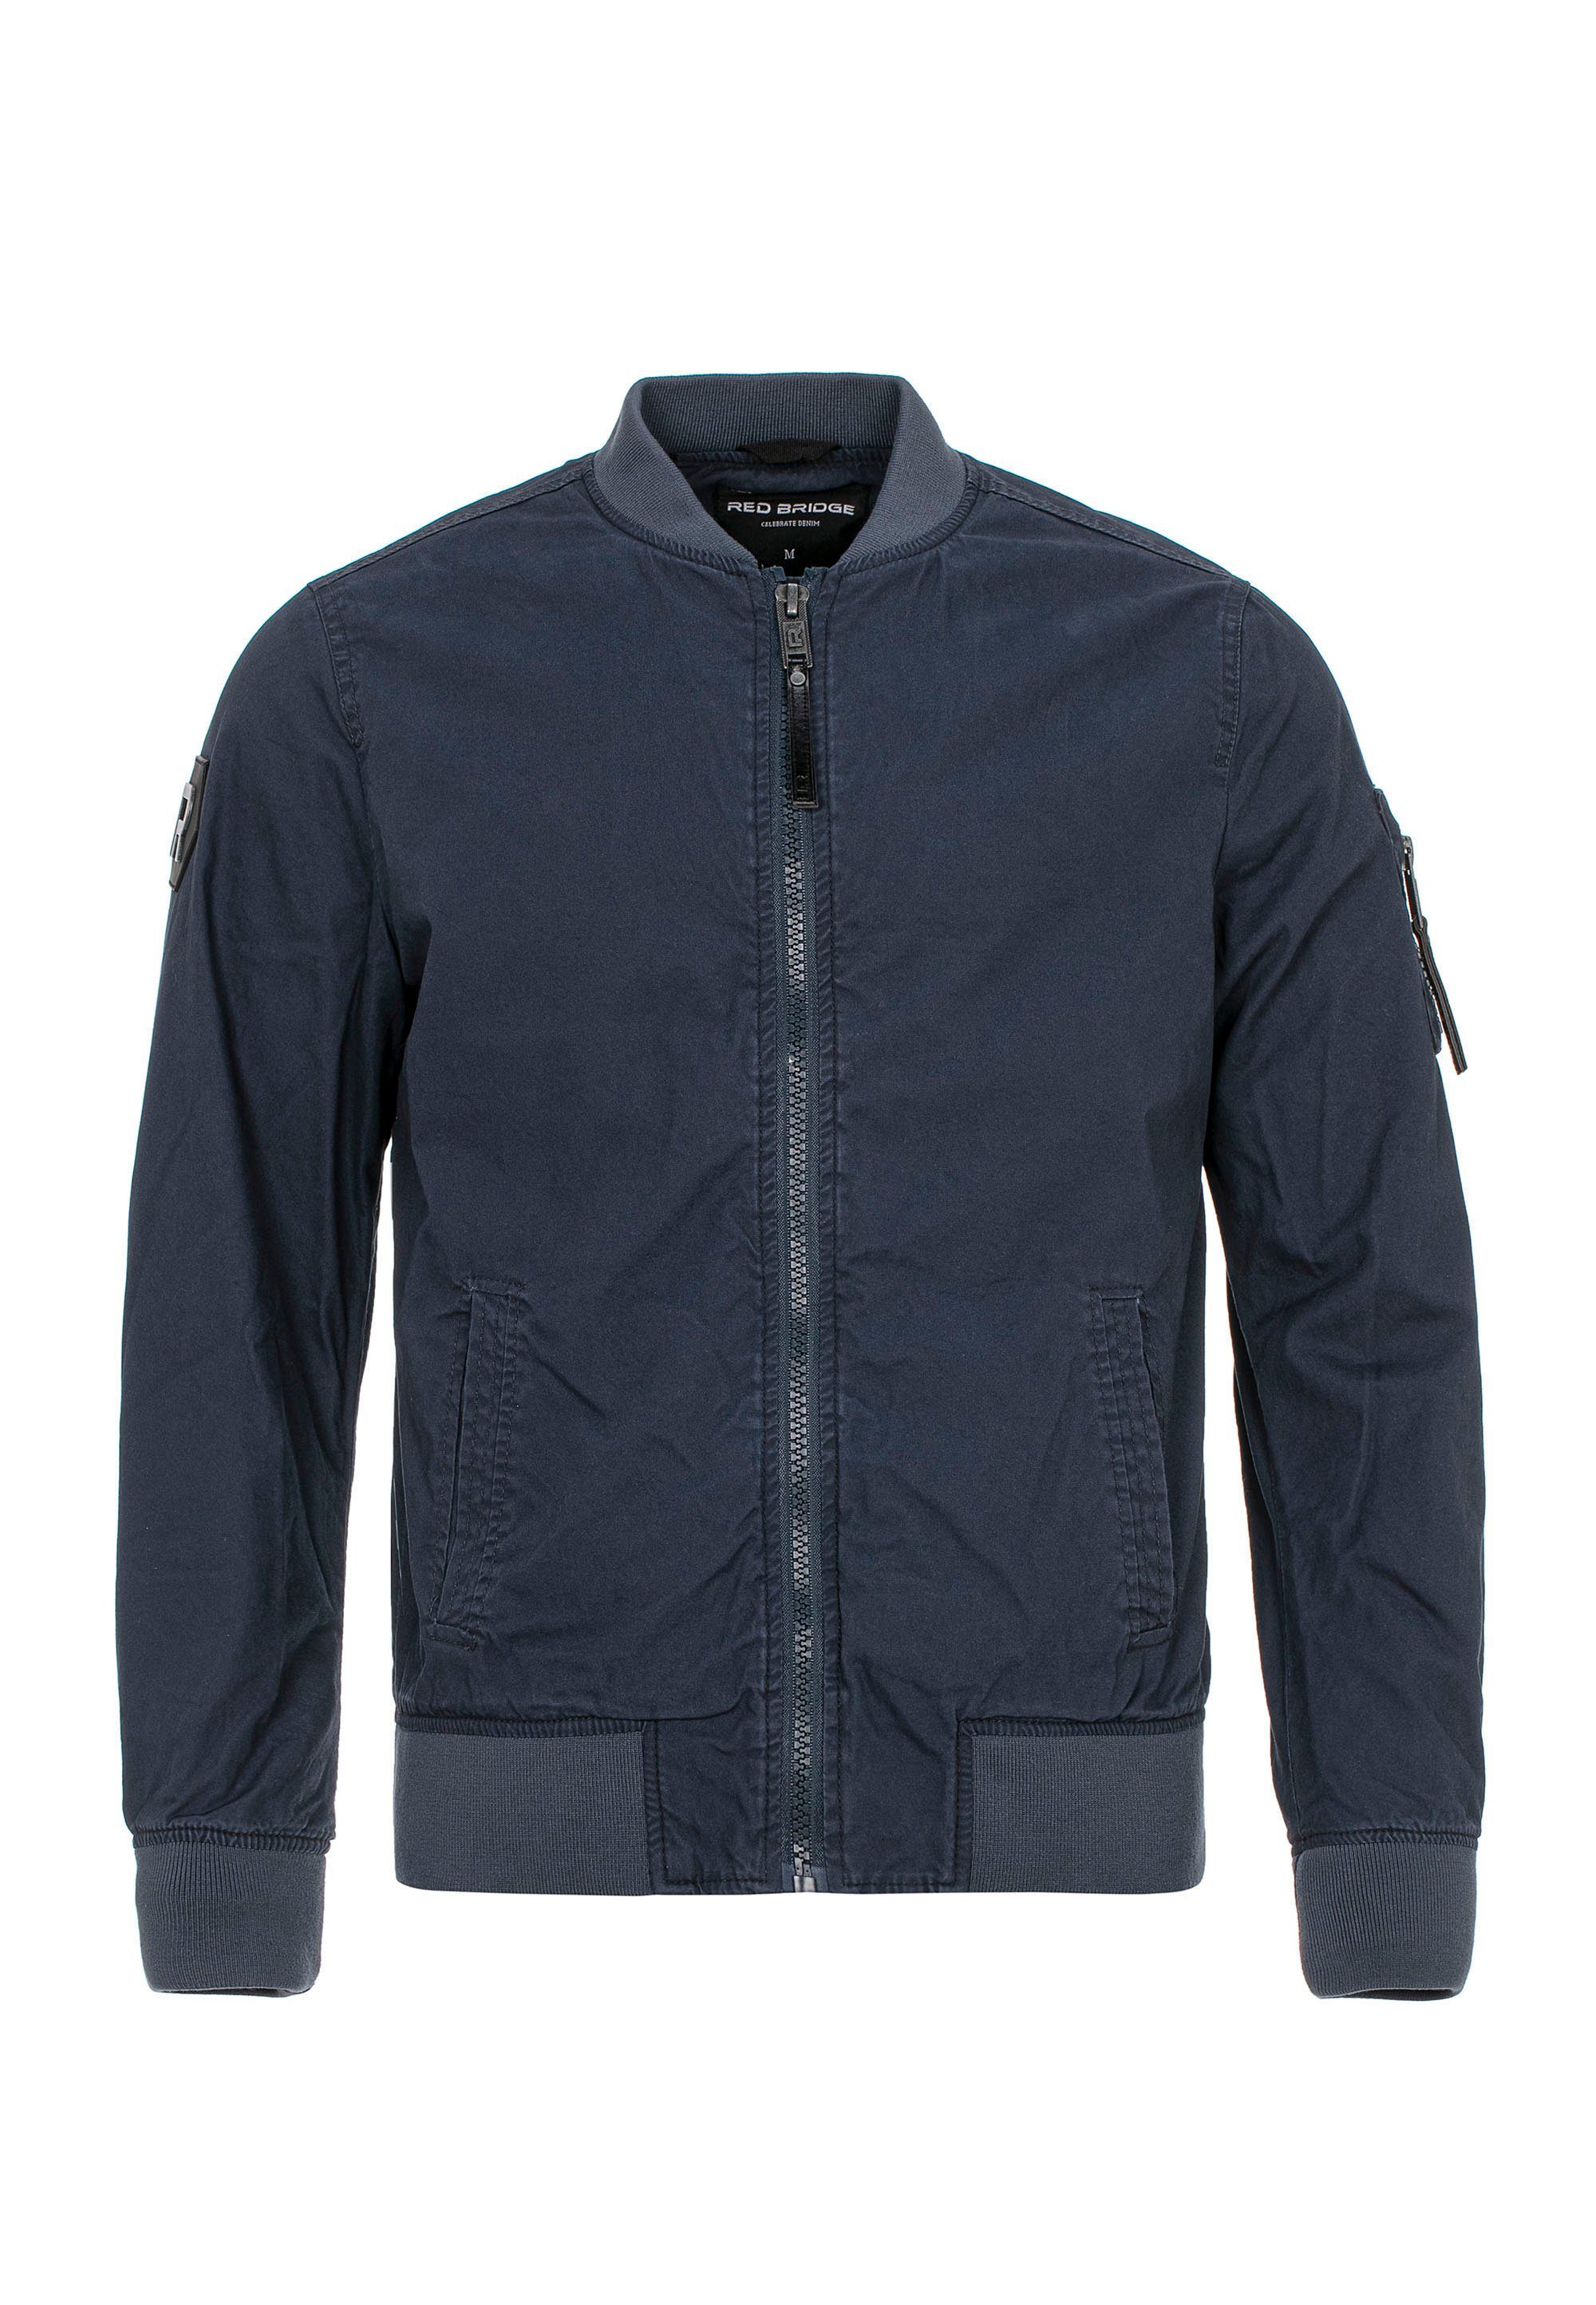 Übergangsjacke Baumwolle Premium Hochwertige Navy Blau RedBridge Softshelljacke